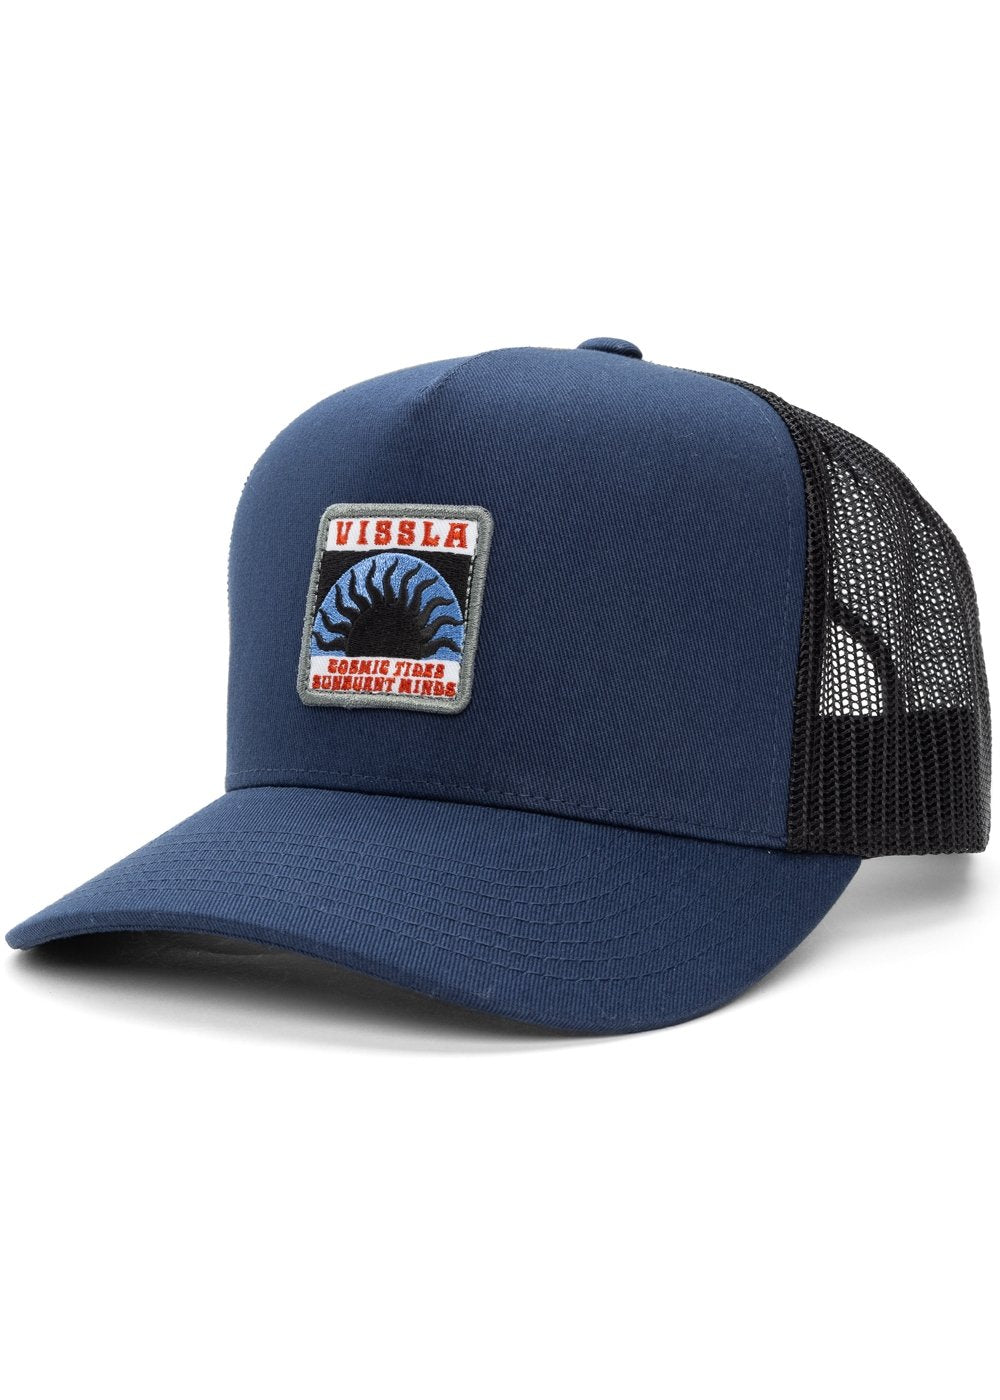 Solid Sets Trucker Hat